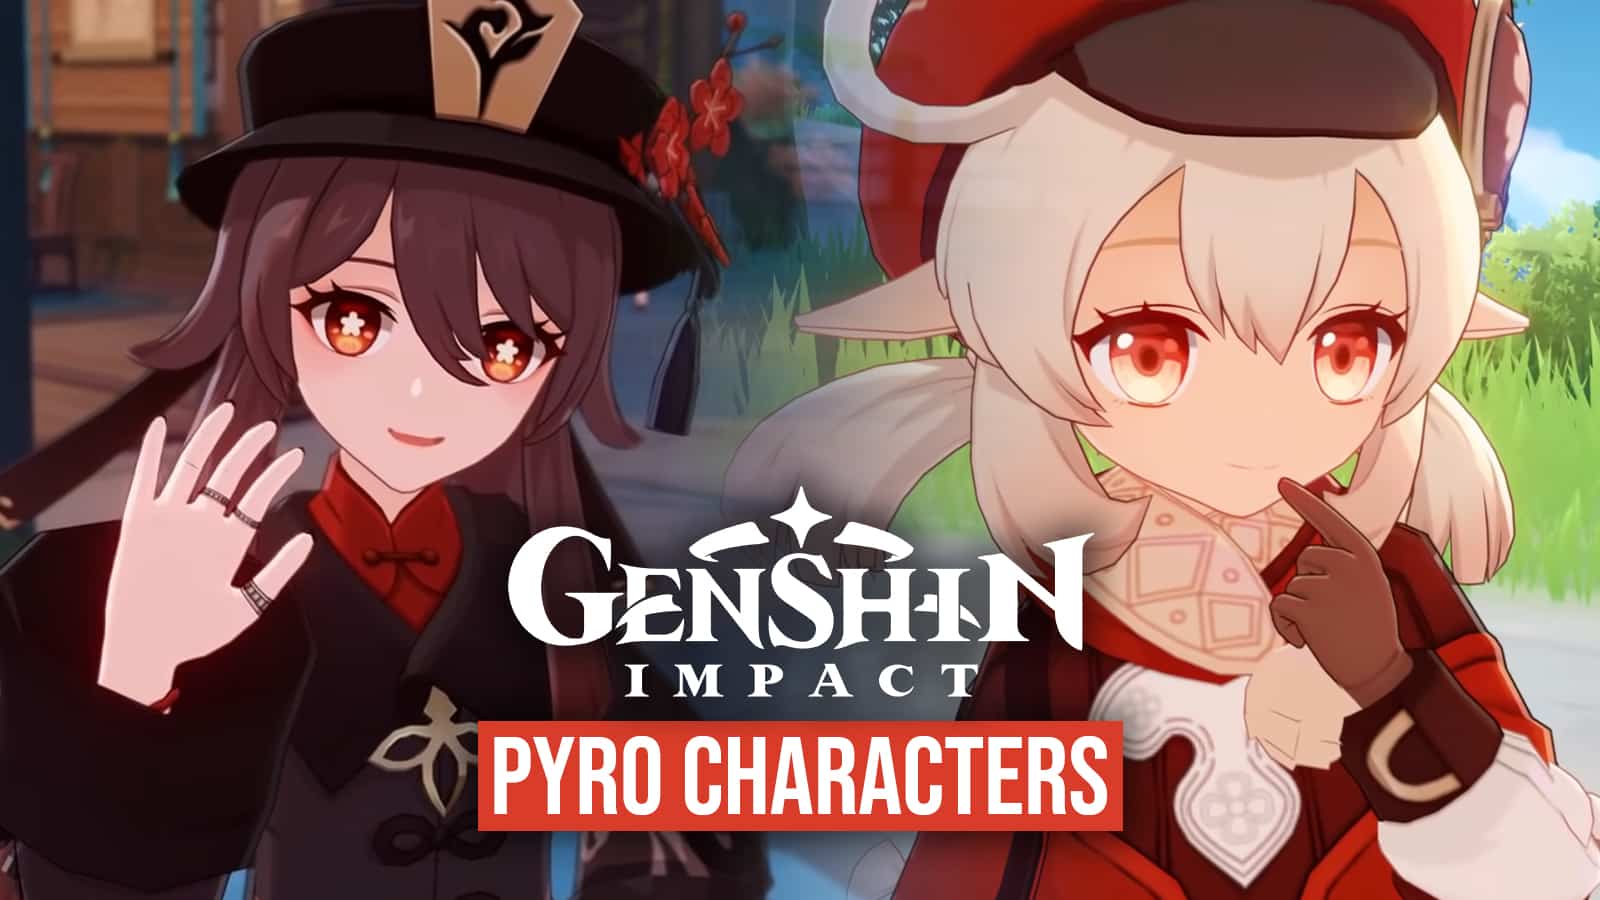 Pyro characters Hu Tao and Klee in Genshin Impact